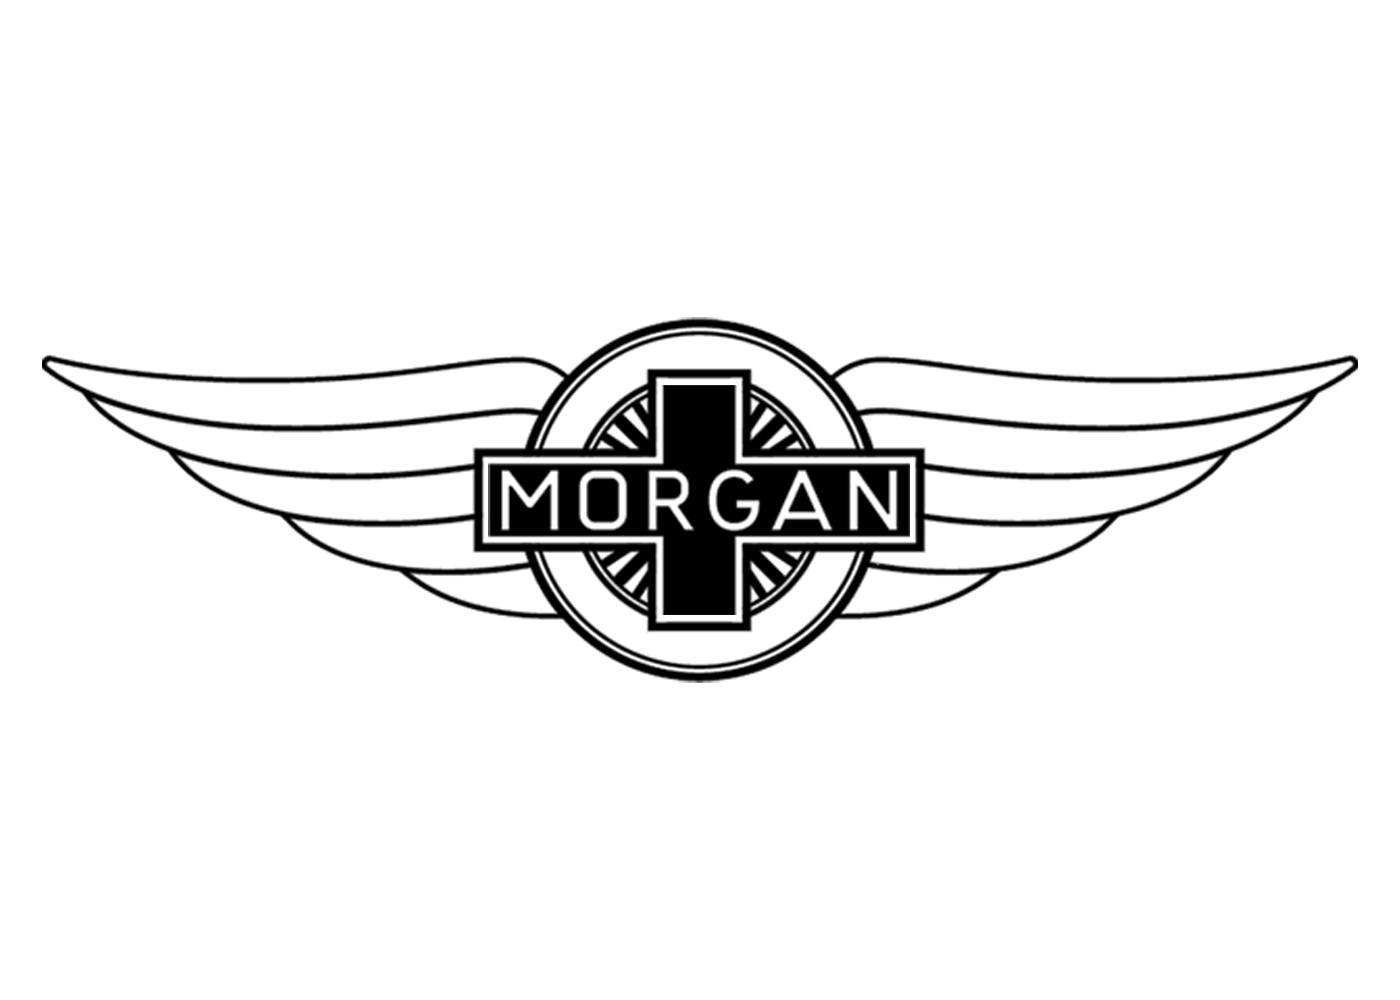 Morgan Motor Company 